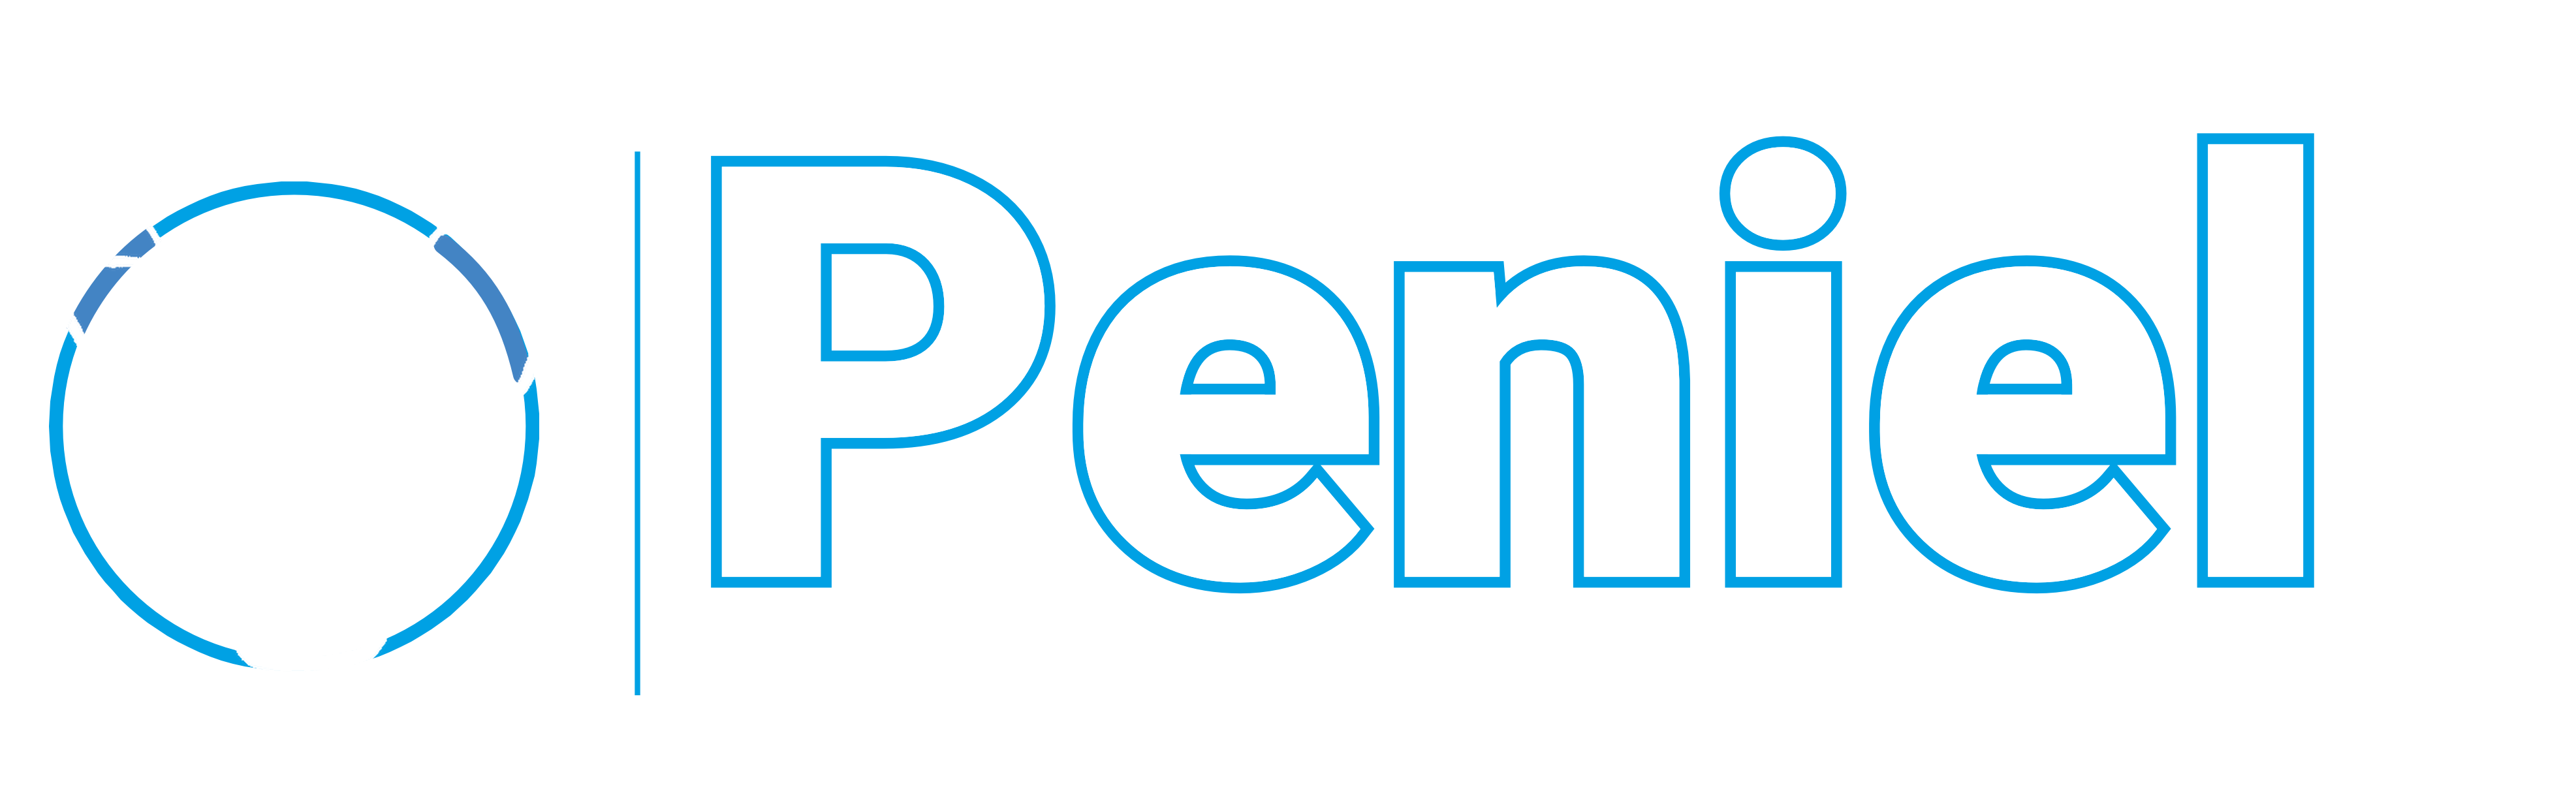 Peniel Treatment Center